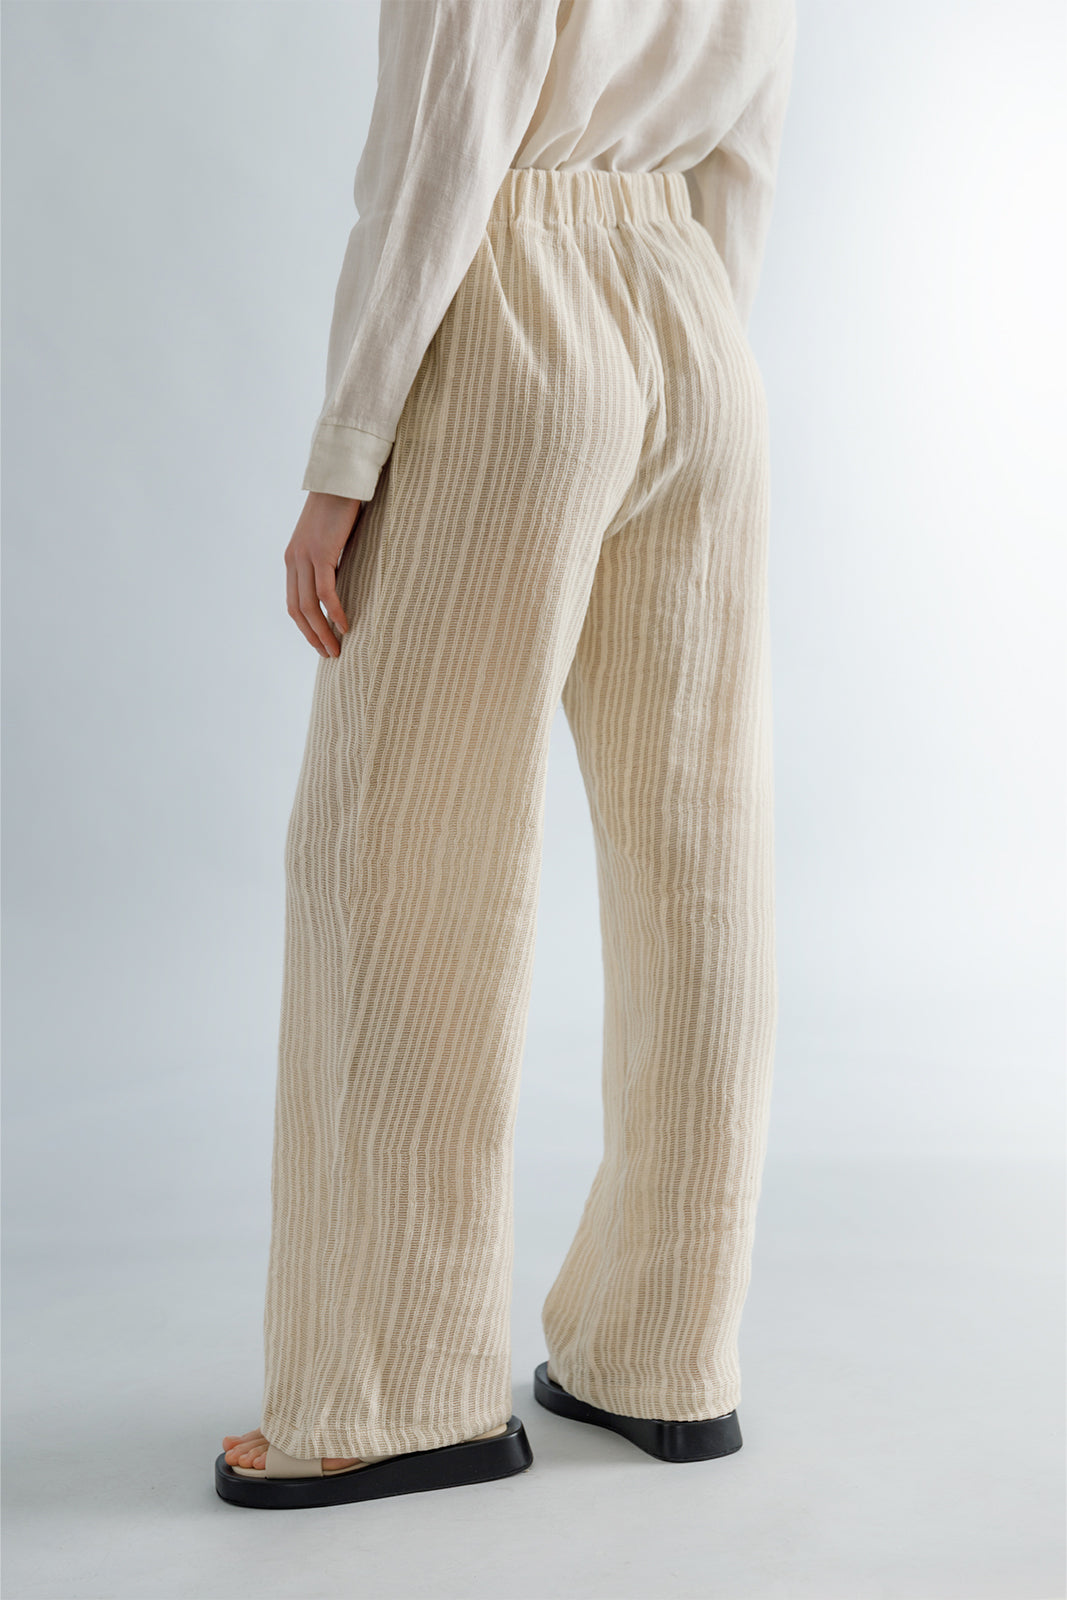 Linen Beige Pants with stripes